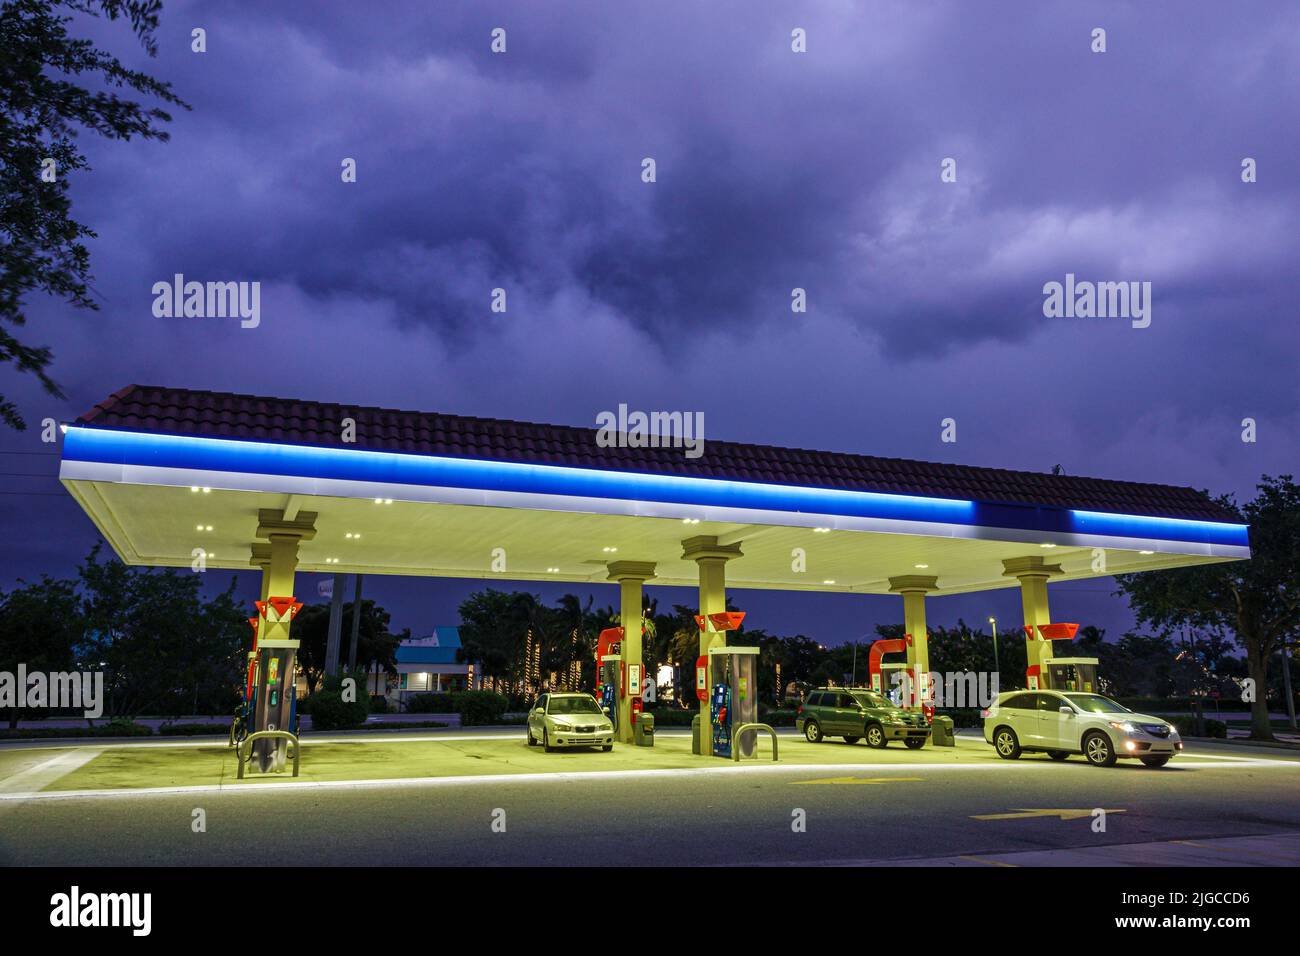 Fort Ft. Myers Florida, gasolinera night canopy Foto de stock